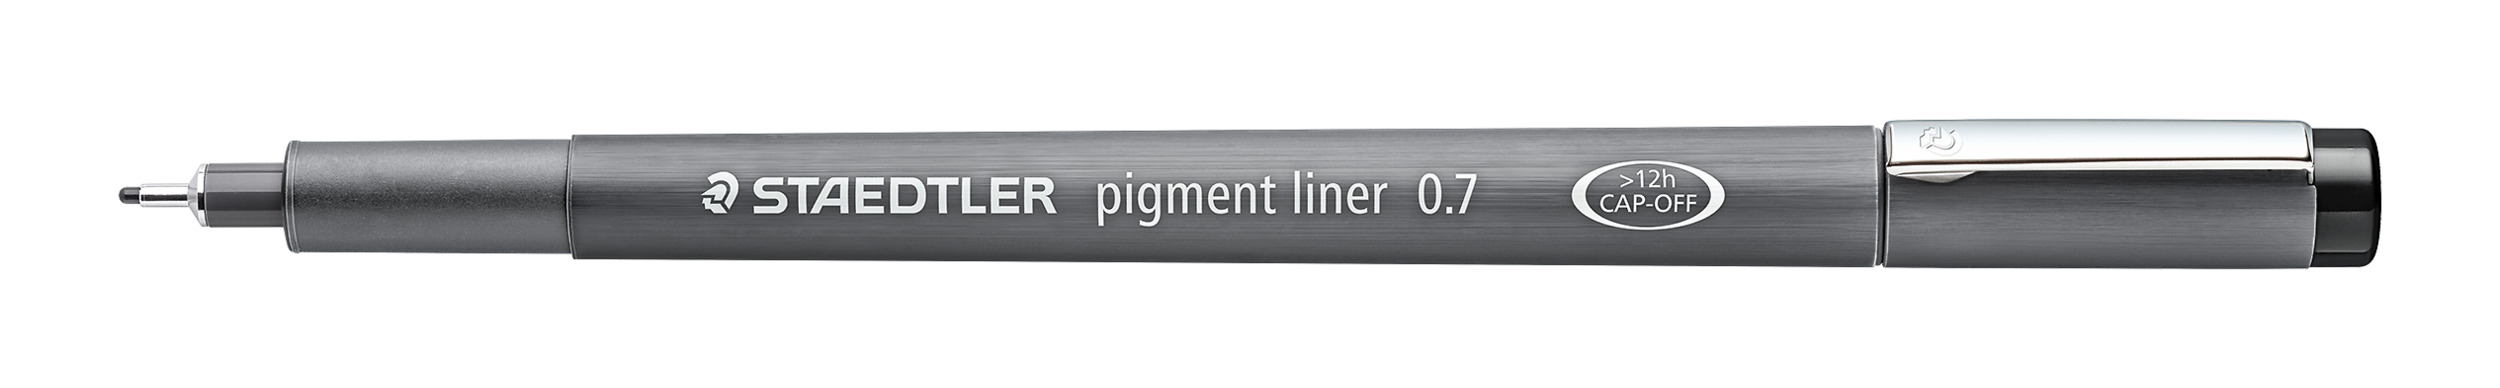 Pigment liner 0.7mm